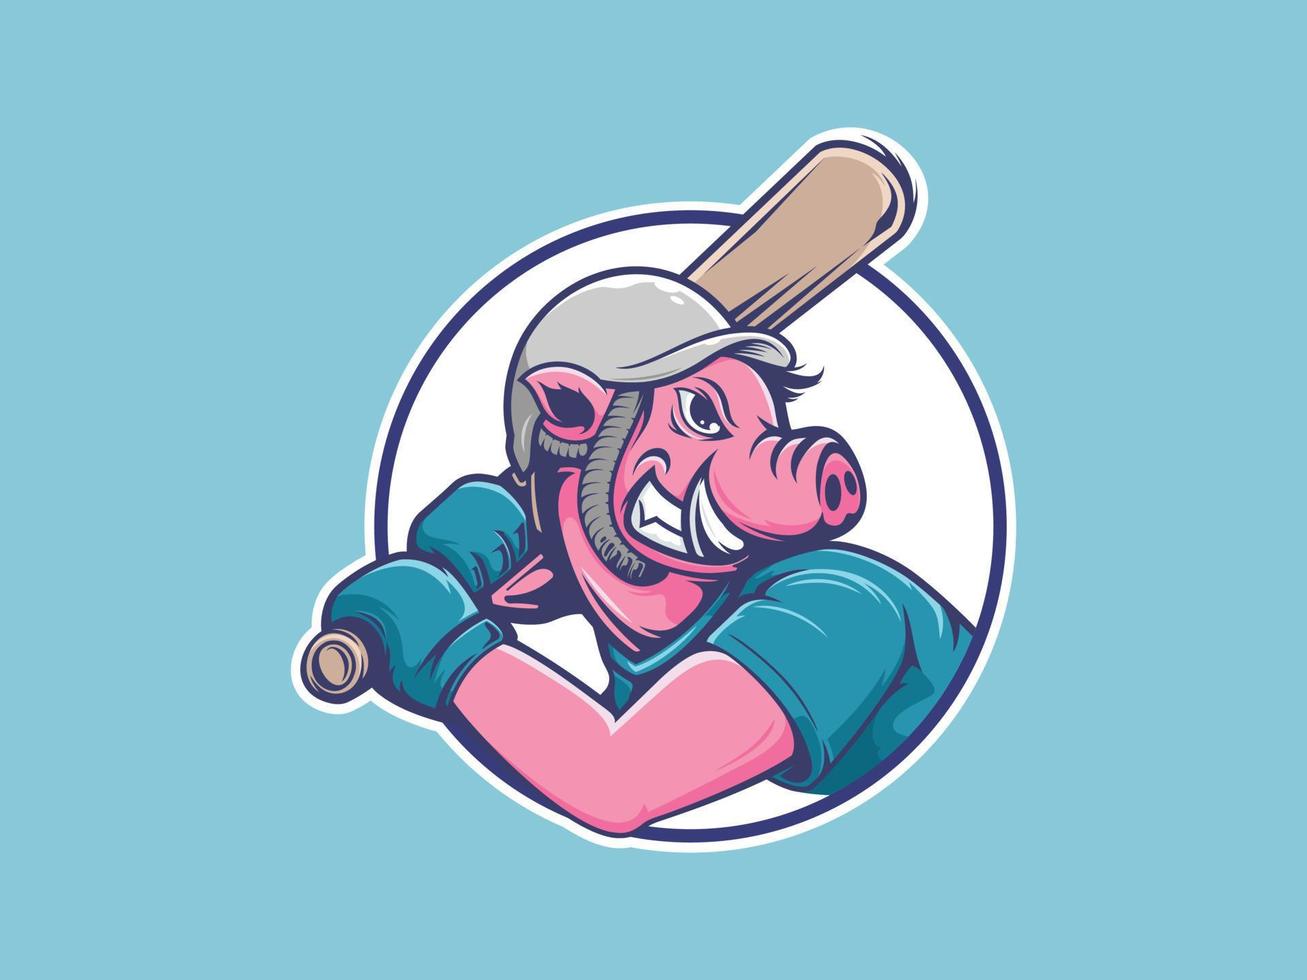 Cerdito enojado jugando béisbol mascota personaje insignia vector